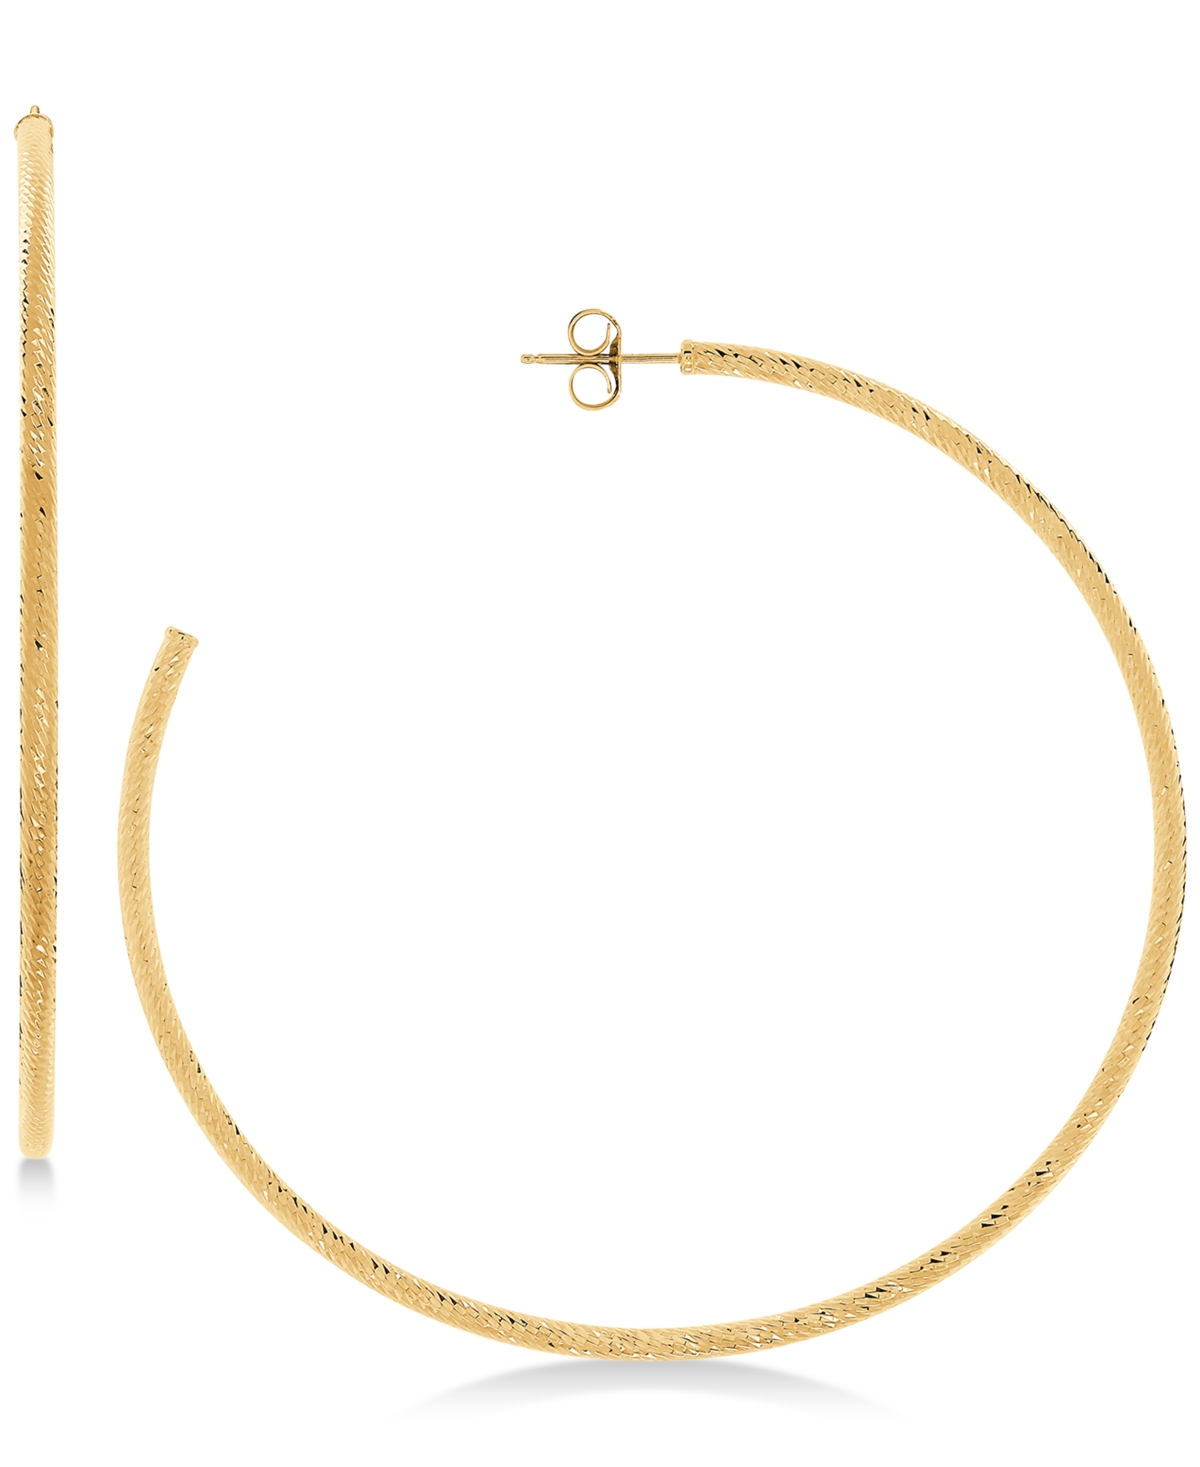 Textured Skinny Hoop Earrings (1-1/2") in 14k Gold - Yellow Gold